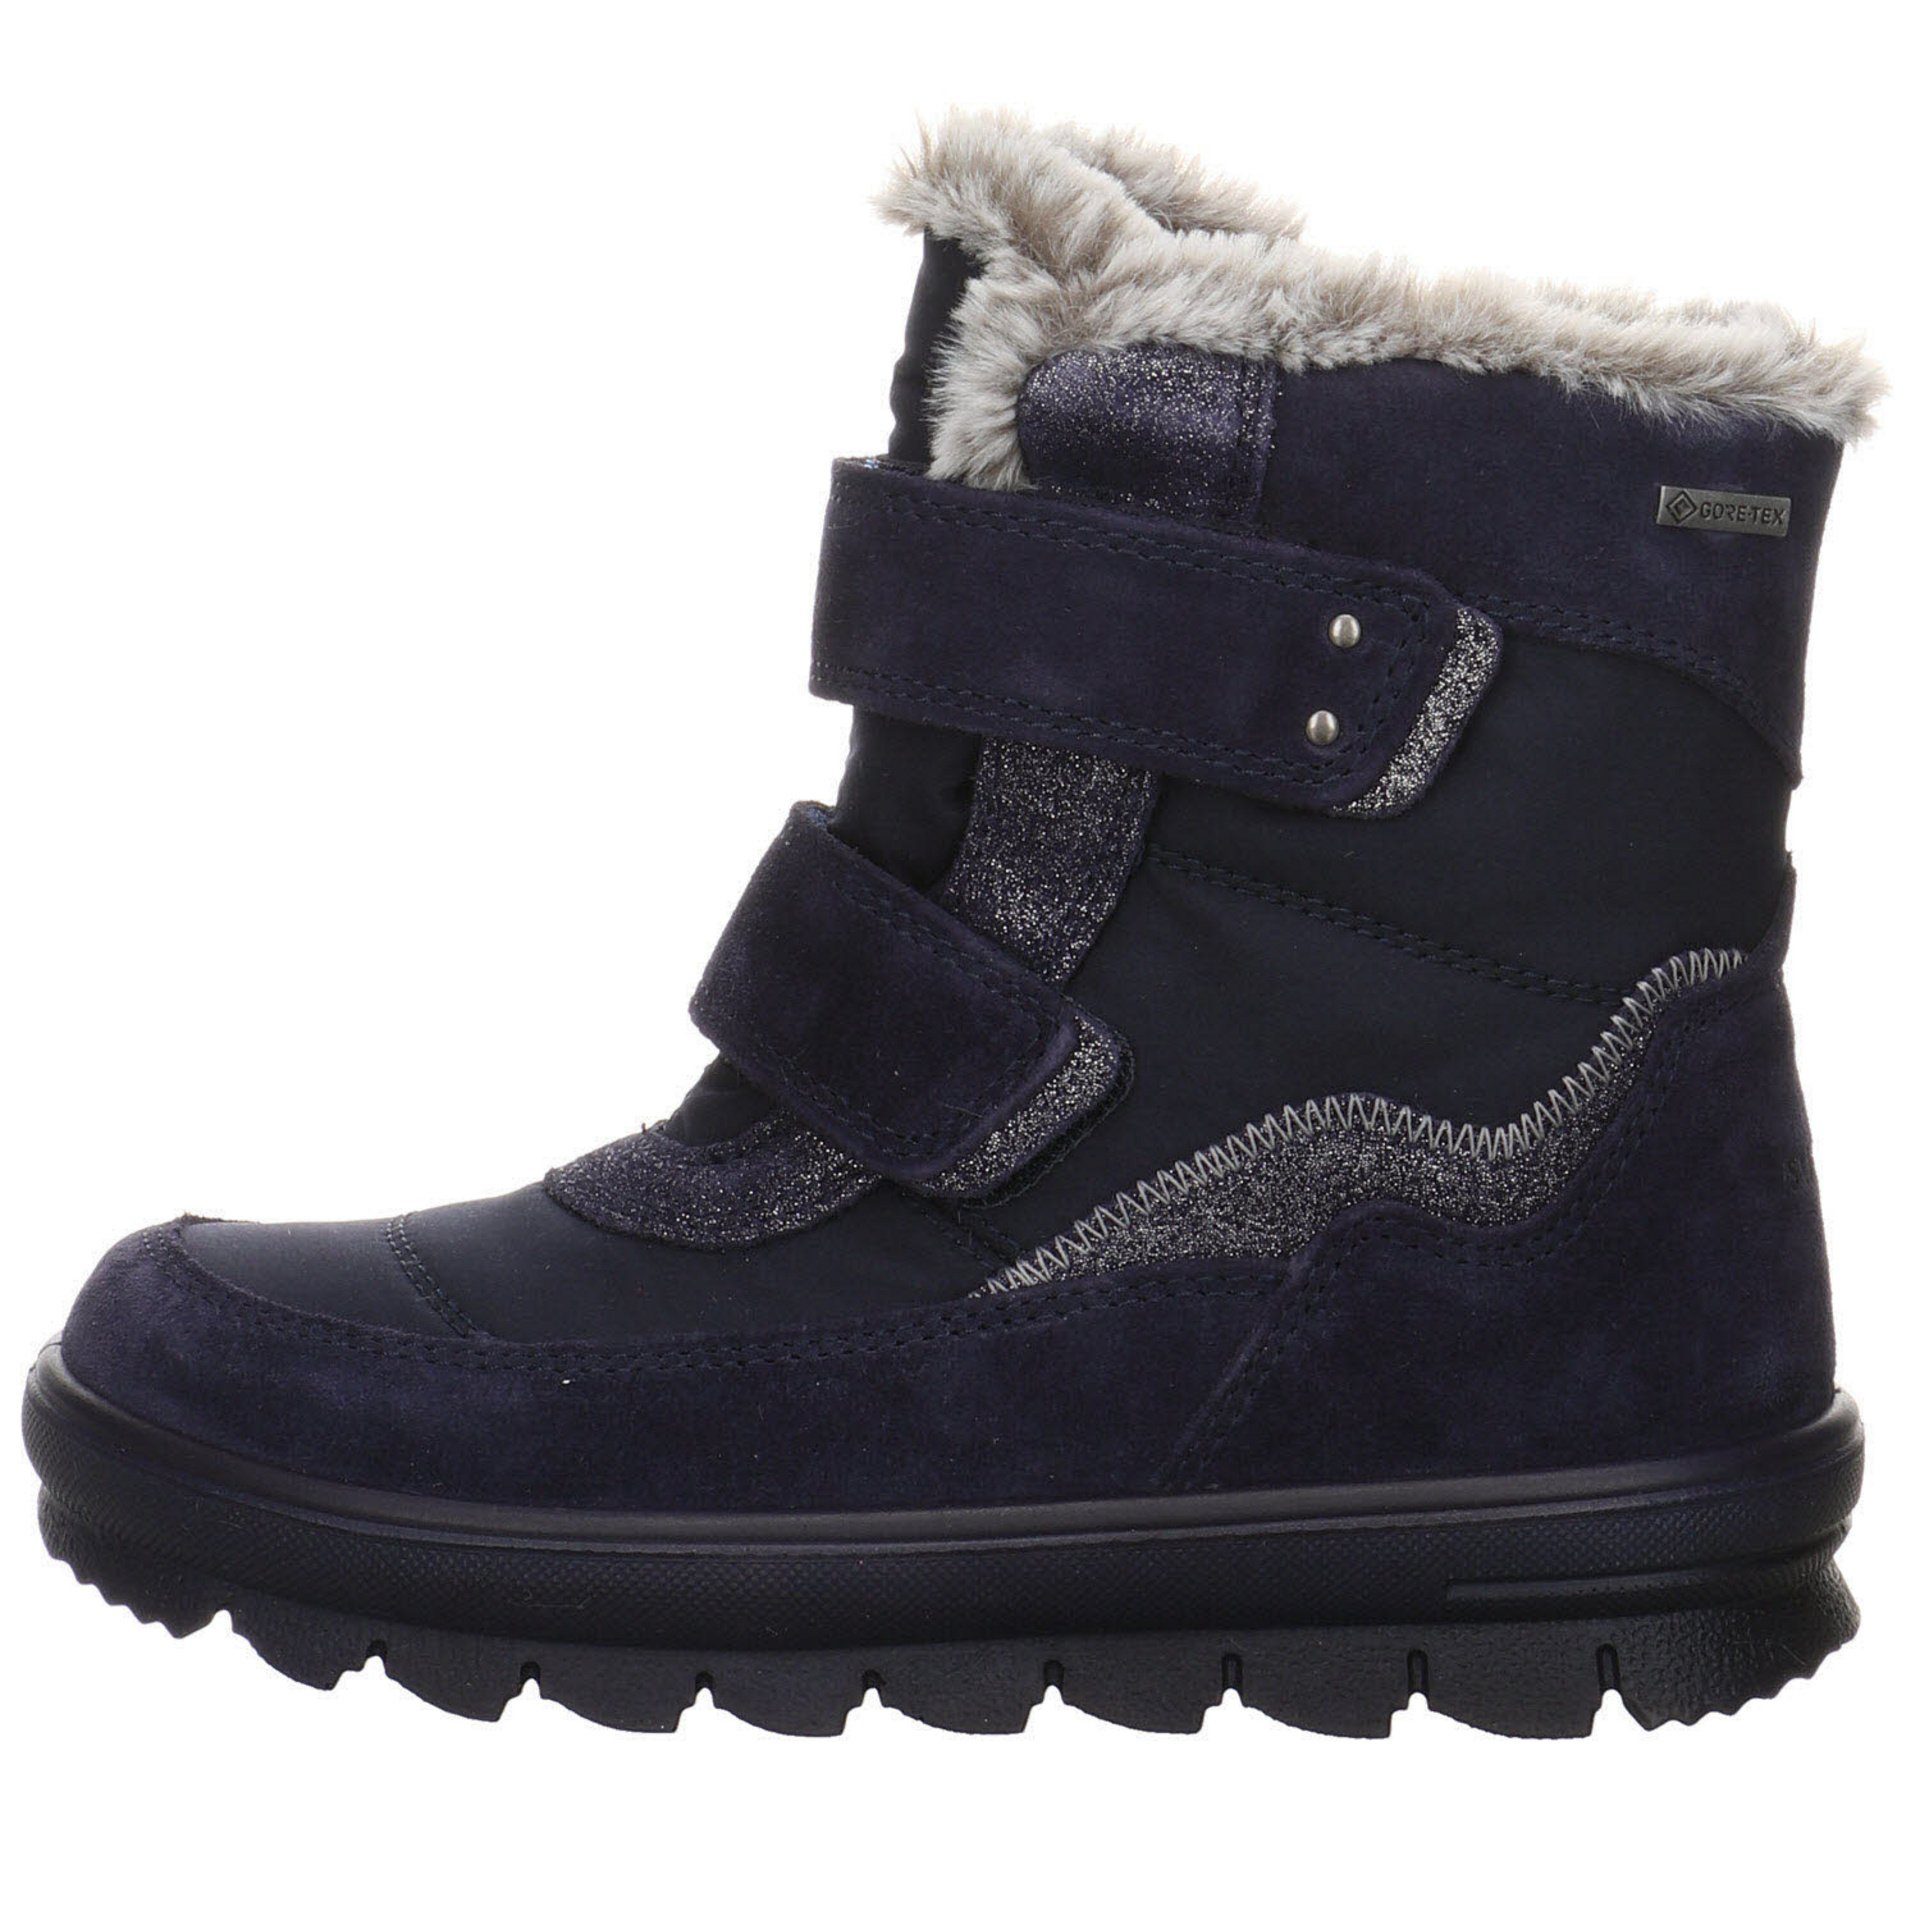 Stiefel (20401636) uni Superfit blau Leder-/Textilkombination Boots Leder-/Textilkombination